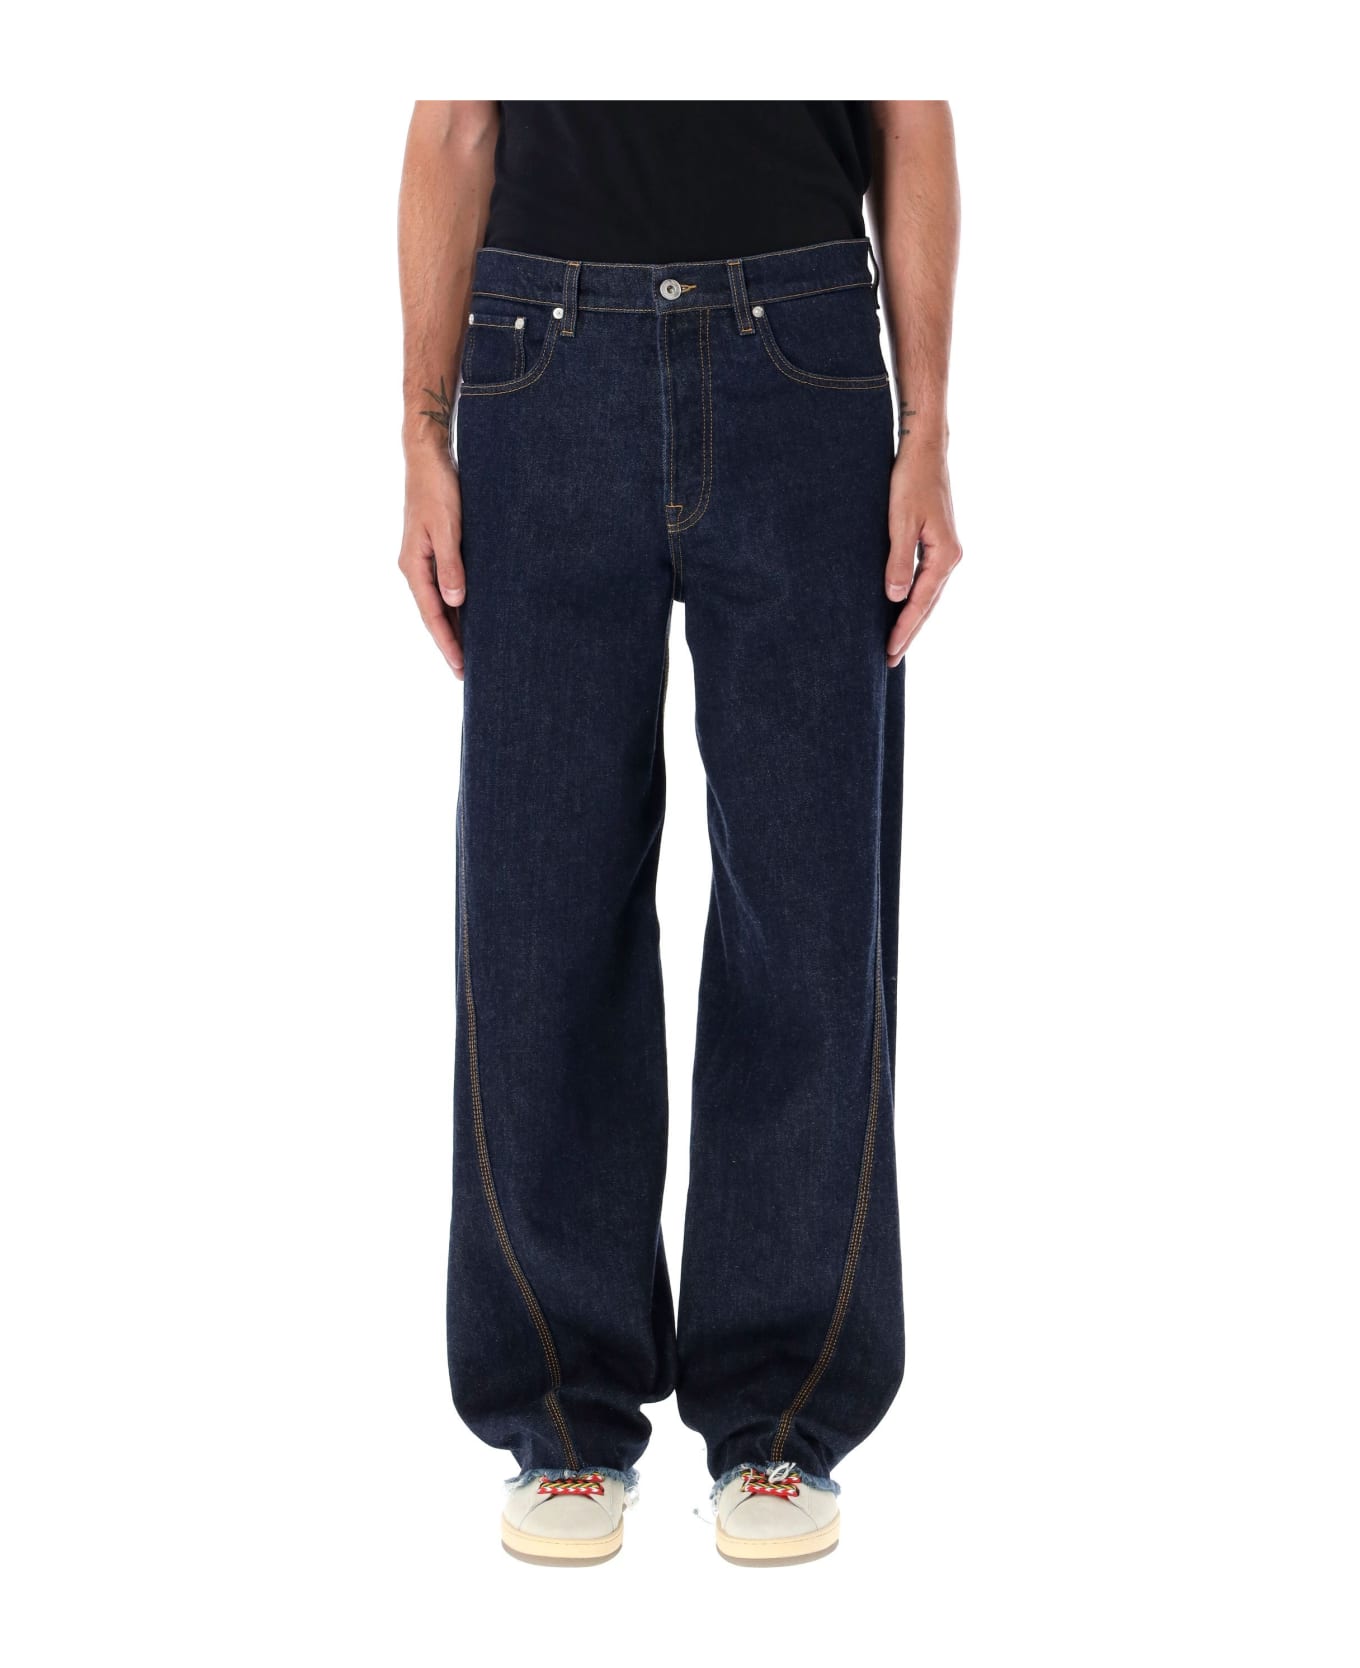 Lanvin Twisted Denim Jeans - BLUE デニム